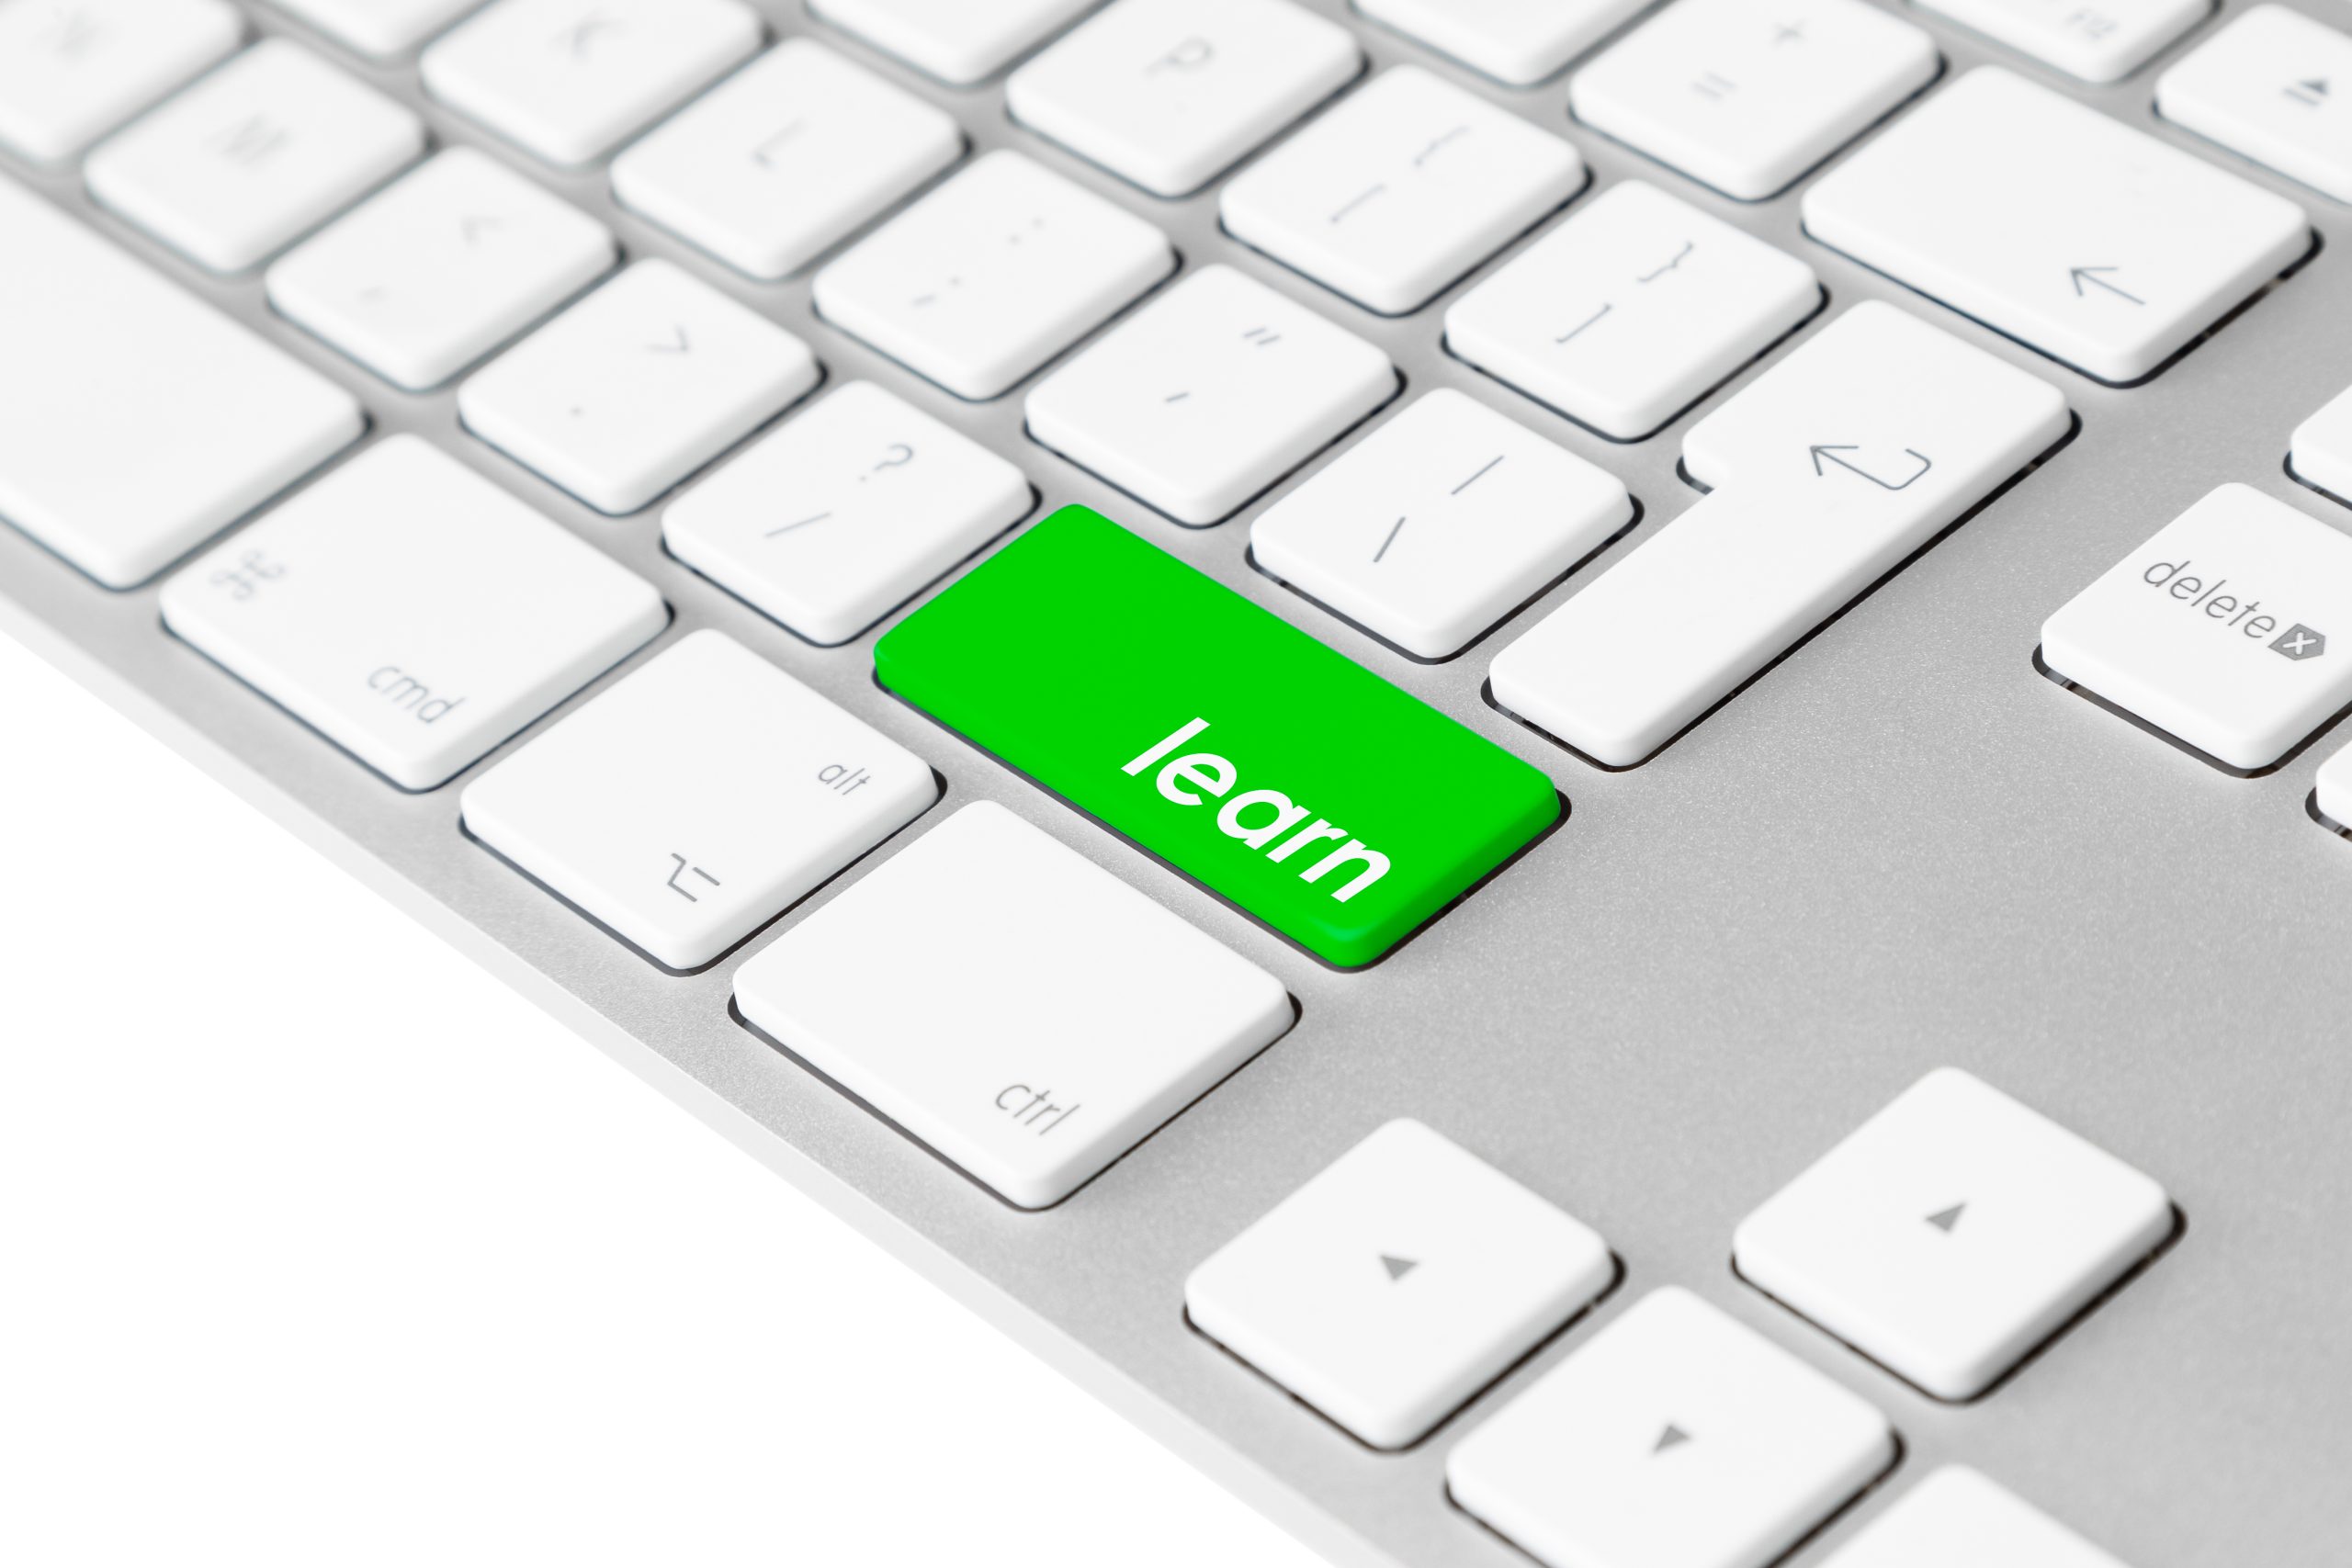 keyboard with green "learn" key